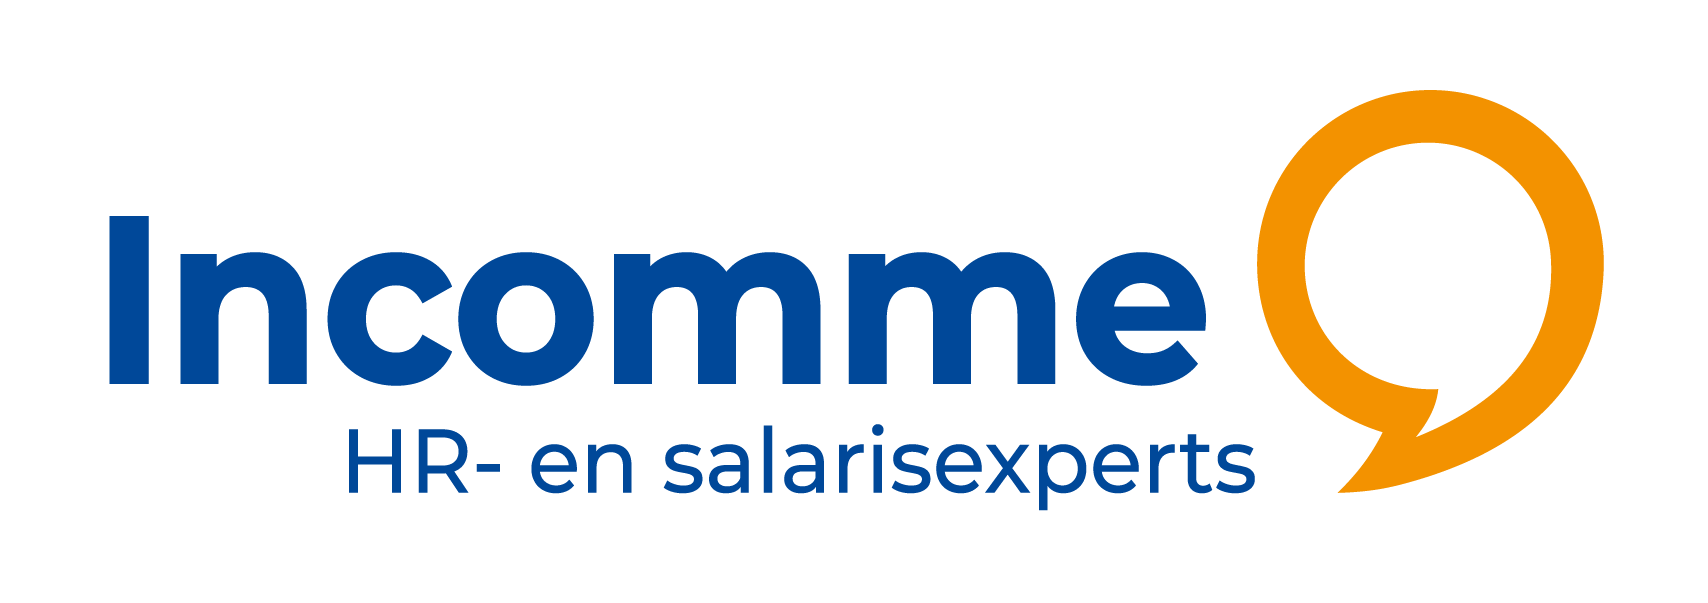 Incomme HR- en salarisexperts logo